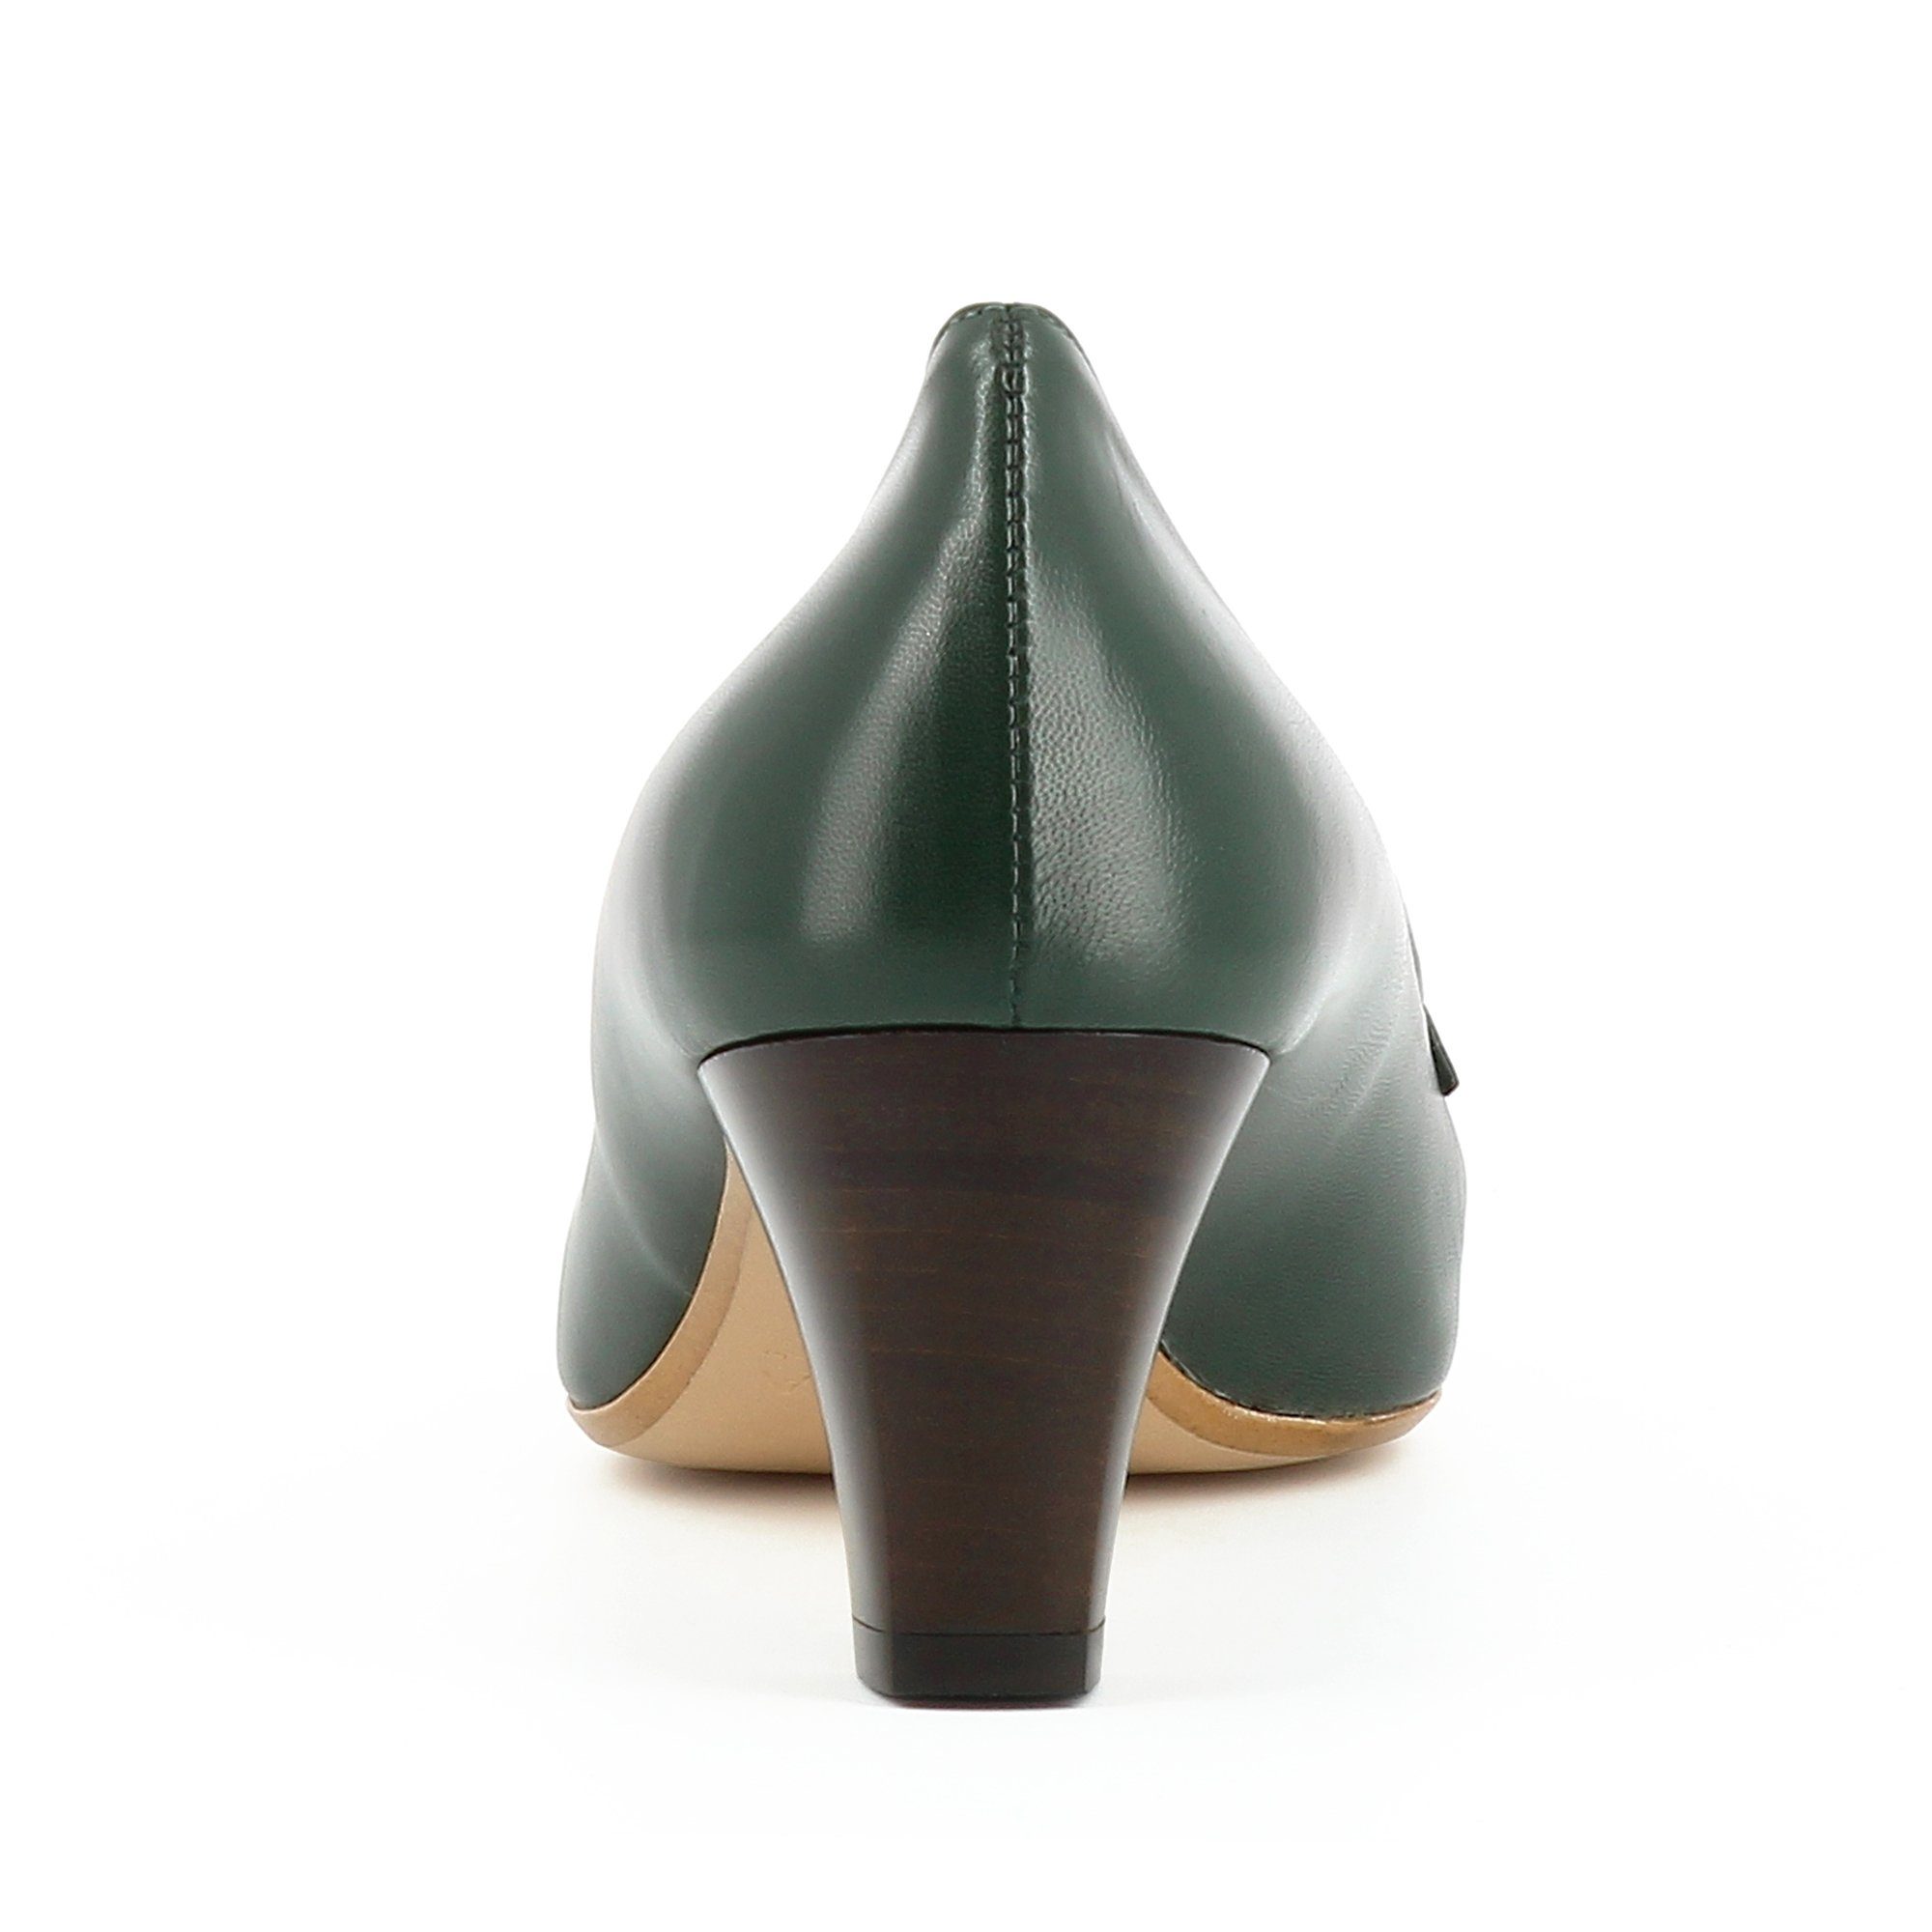 Evita PATRIZIA Pumps Handmade Italy dunkelgrün in